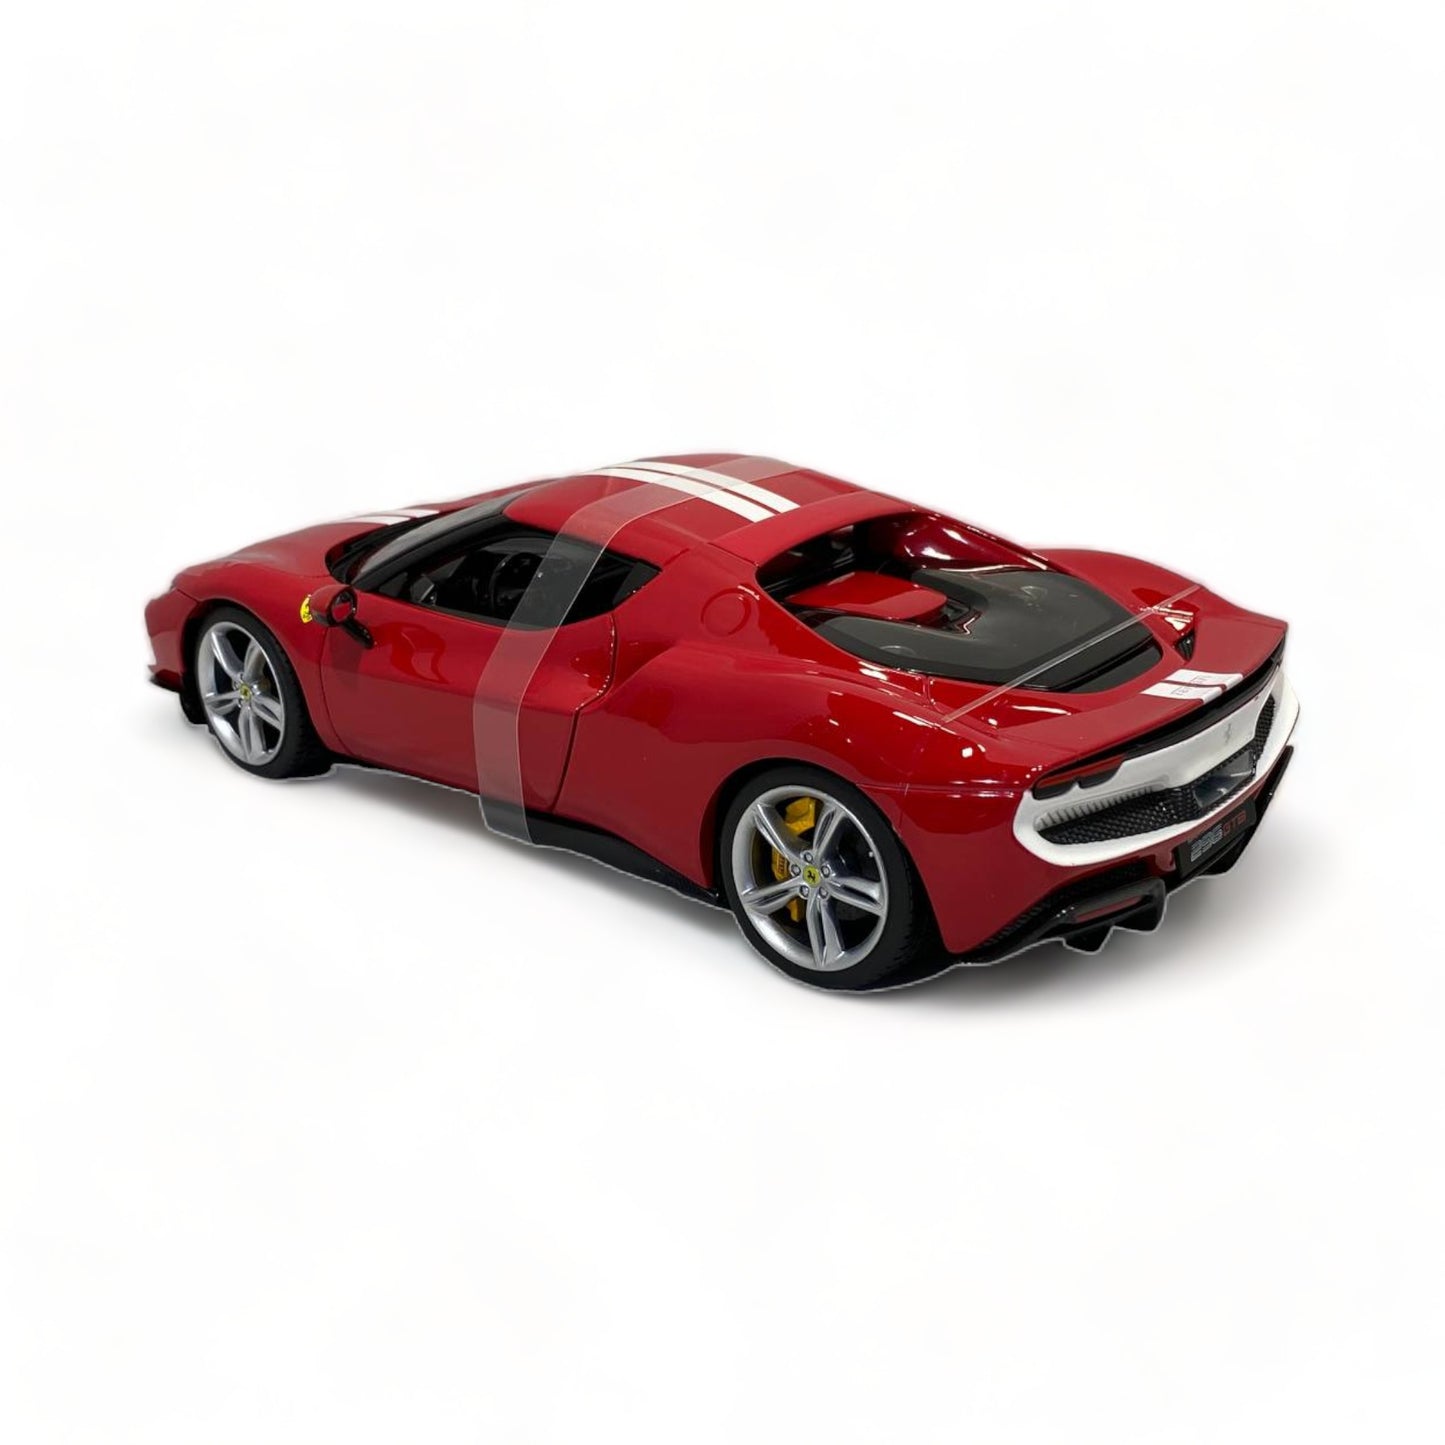 1/18 Bburago Ferrari 296 GTB Assetto Fiorano Red/White model car|Sold in Dturman.com Dubai UAE.